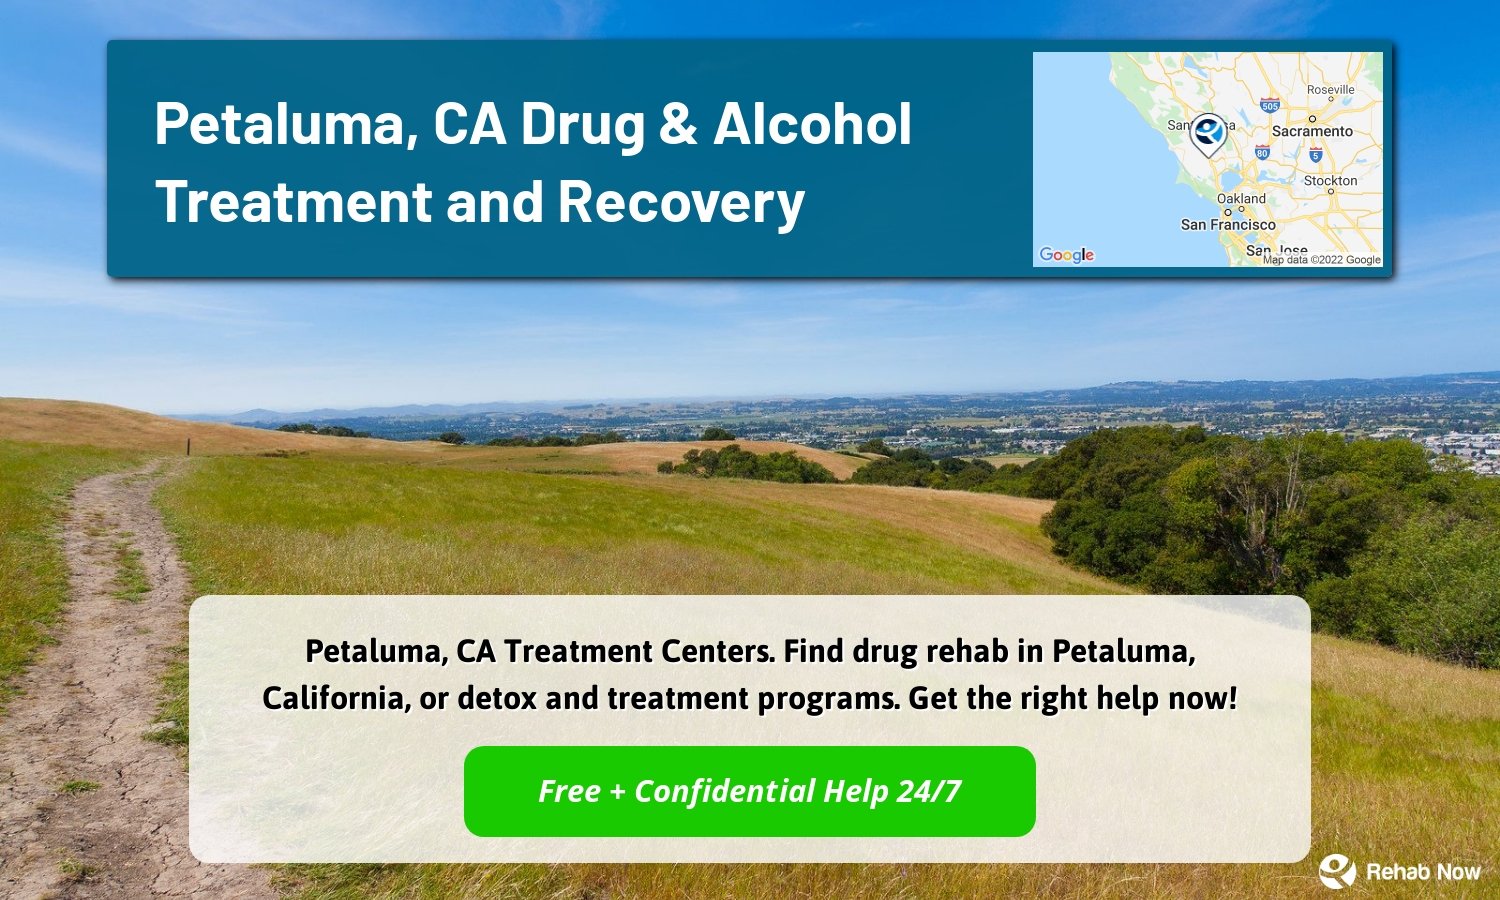 Petaluma, CA Treatment Centers. Find drug rehab in Petaluma, California, or detox and treatment programs. Get the right help now!